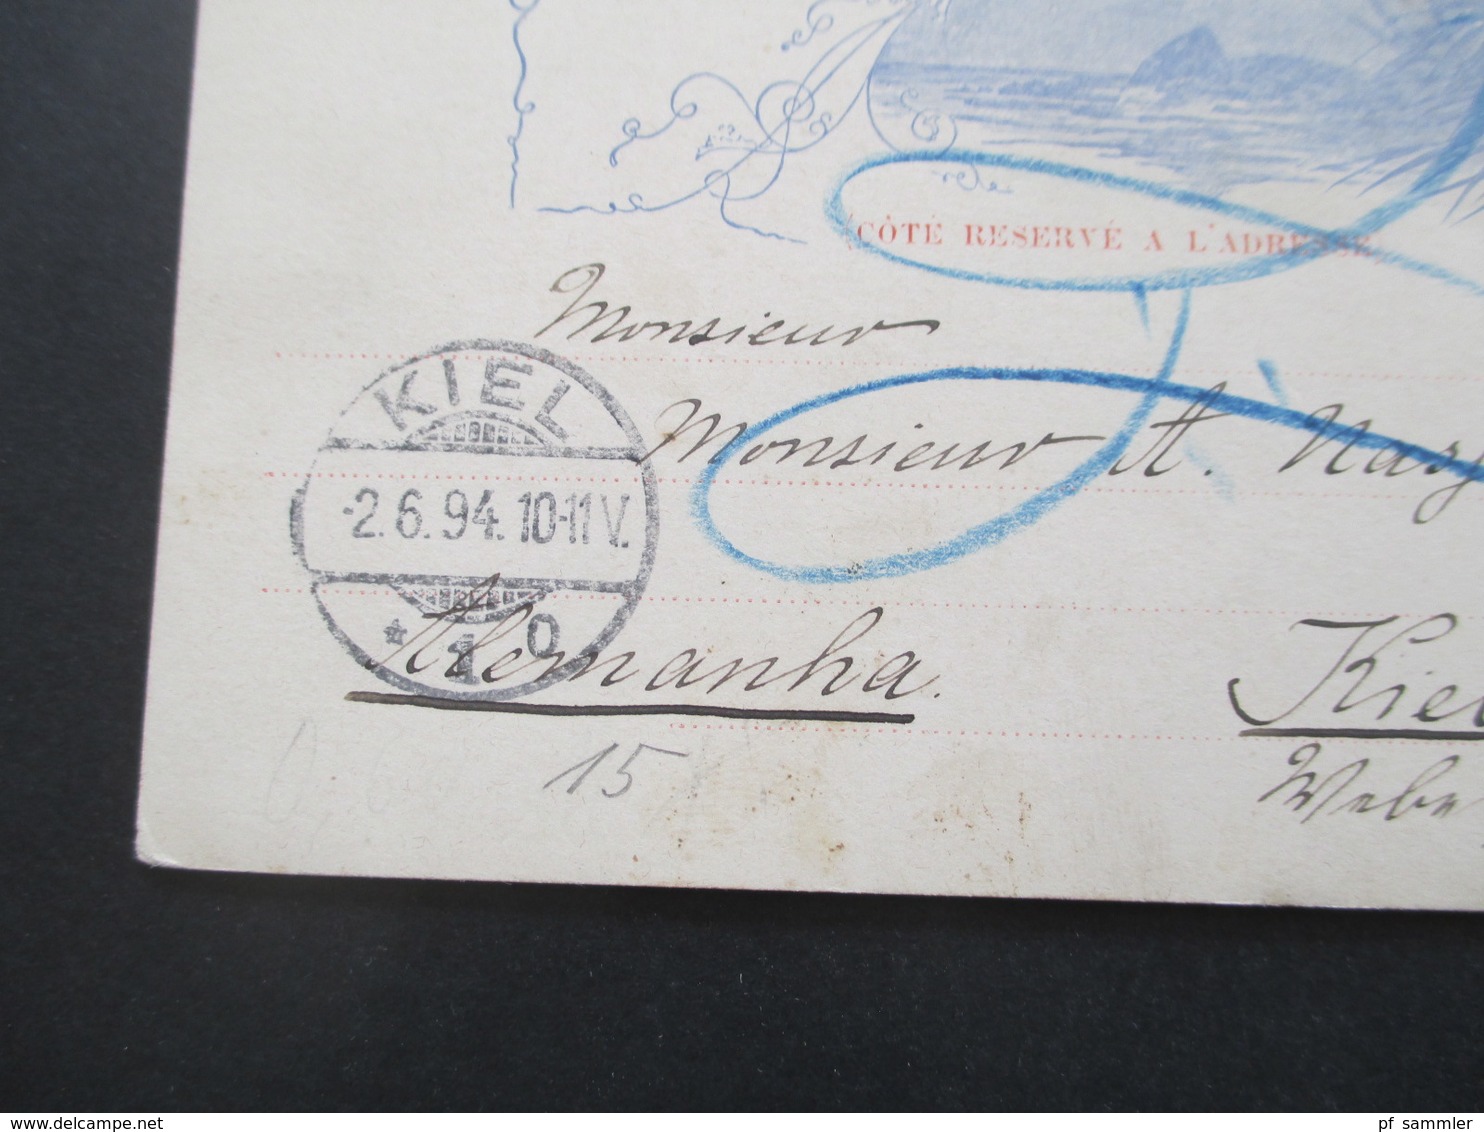 Brasilien 1894 Ganzsache Union Postale Universelle Rio De Janeiro Nach Kiel Mit Ank. Stempel Und Blaustift - Storia Postale